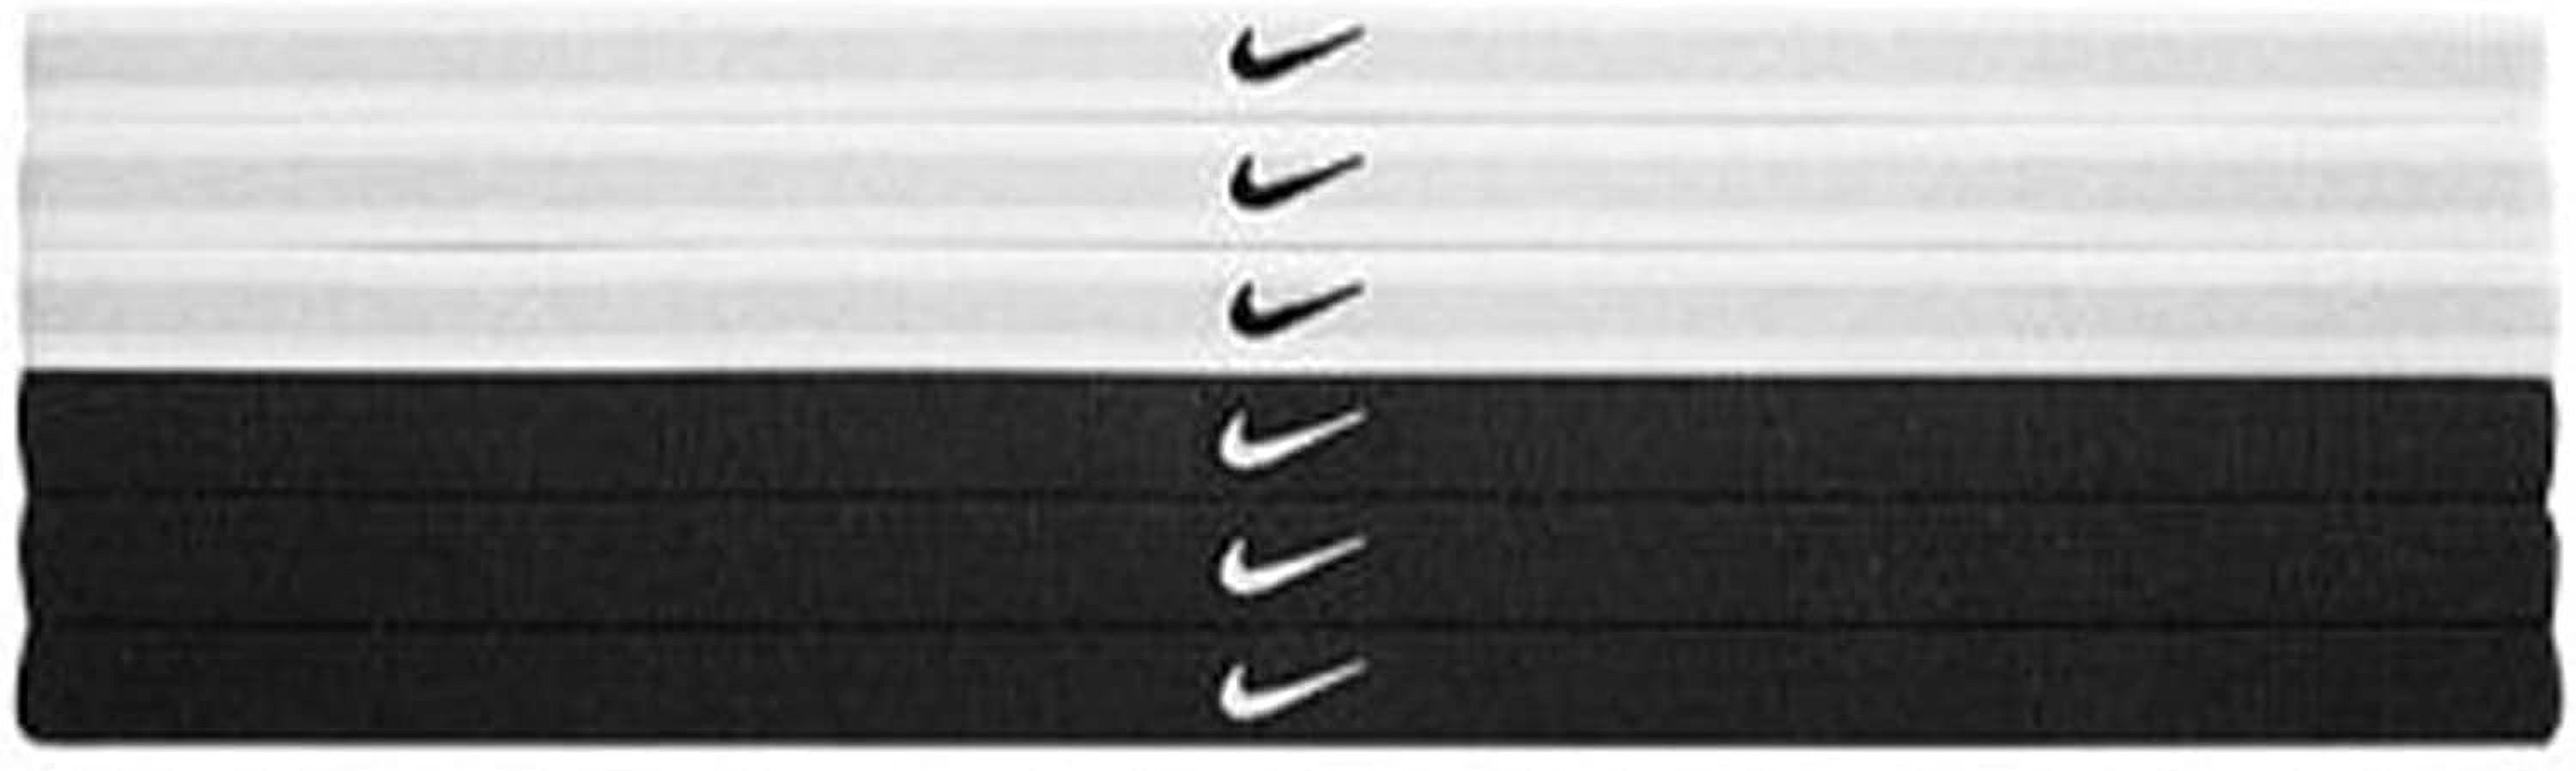 Bandeau homme Unisexe Nike NIKE ELASTIC HEADBANDS 2.0 3 PK Sport 2000